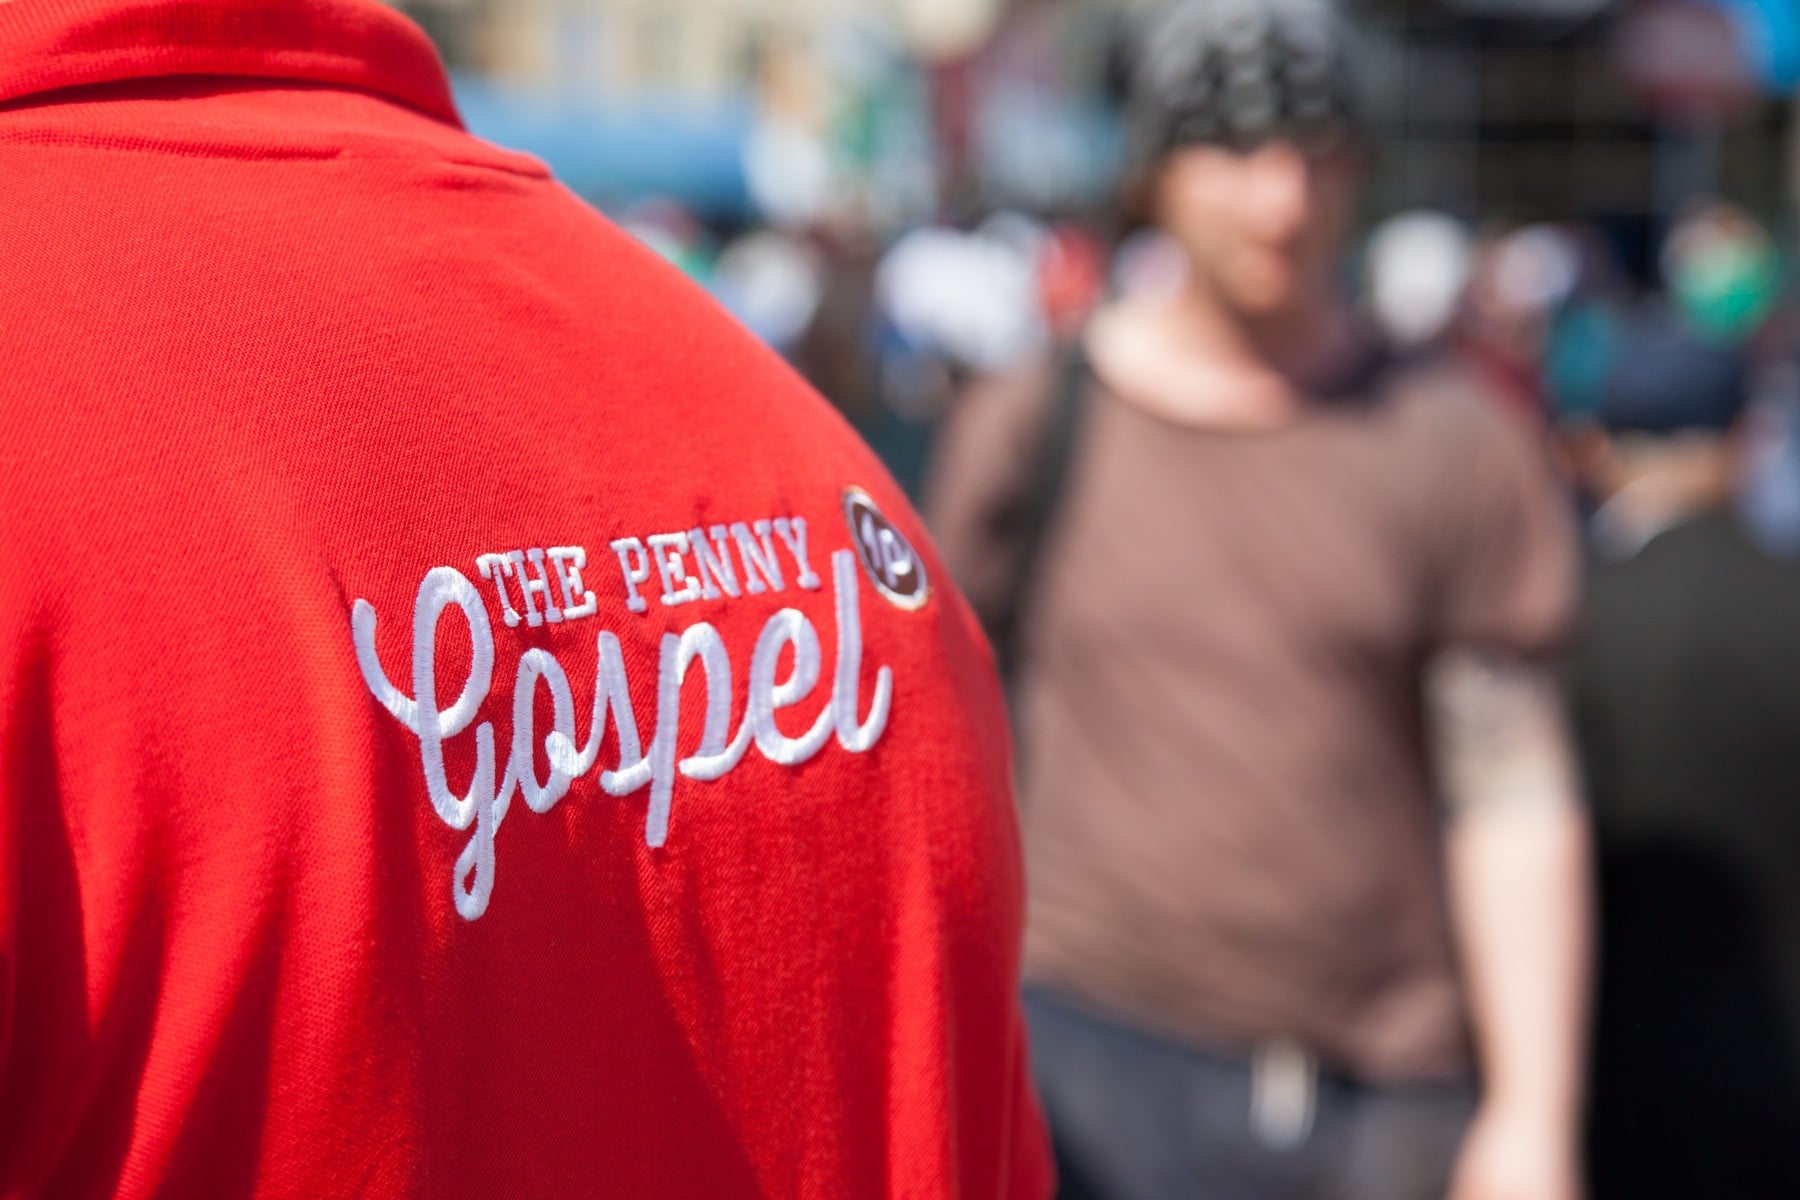 The Penny Gospel distribution